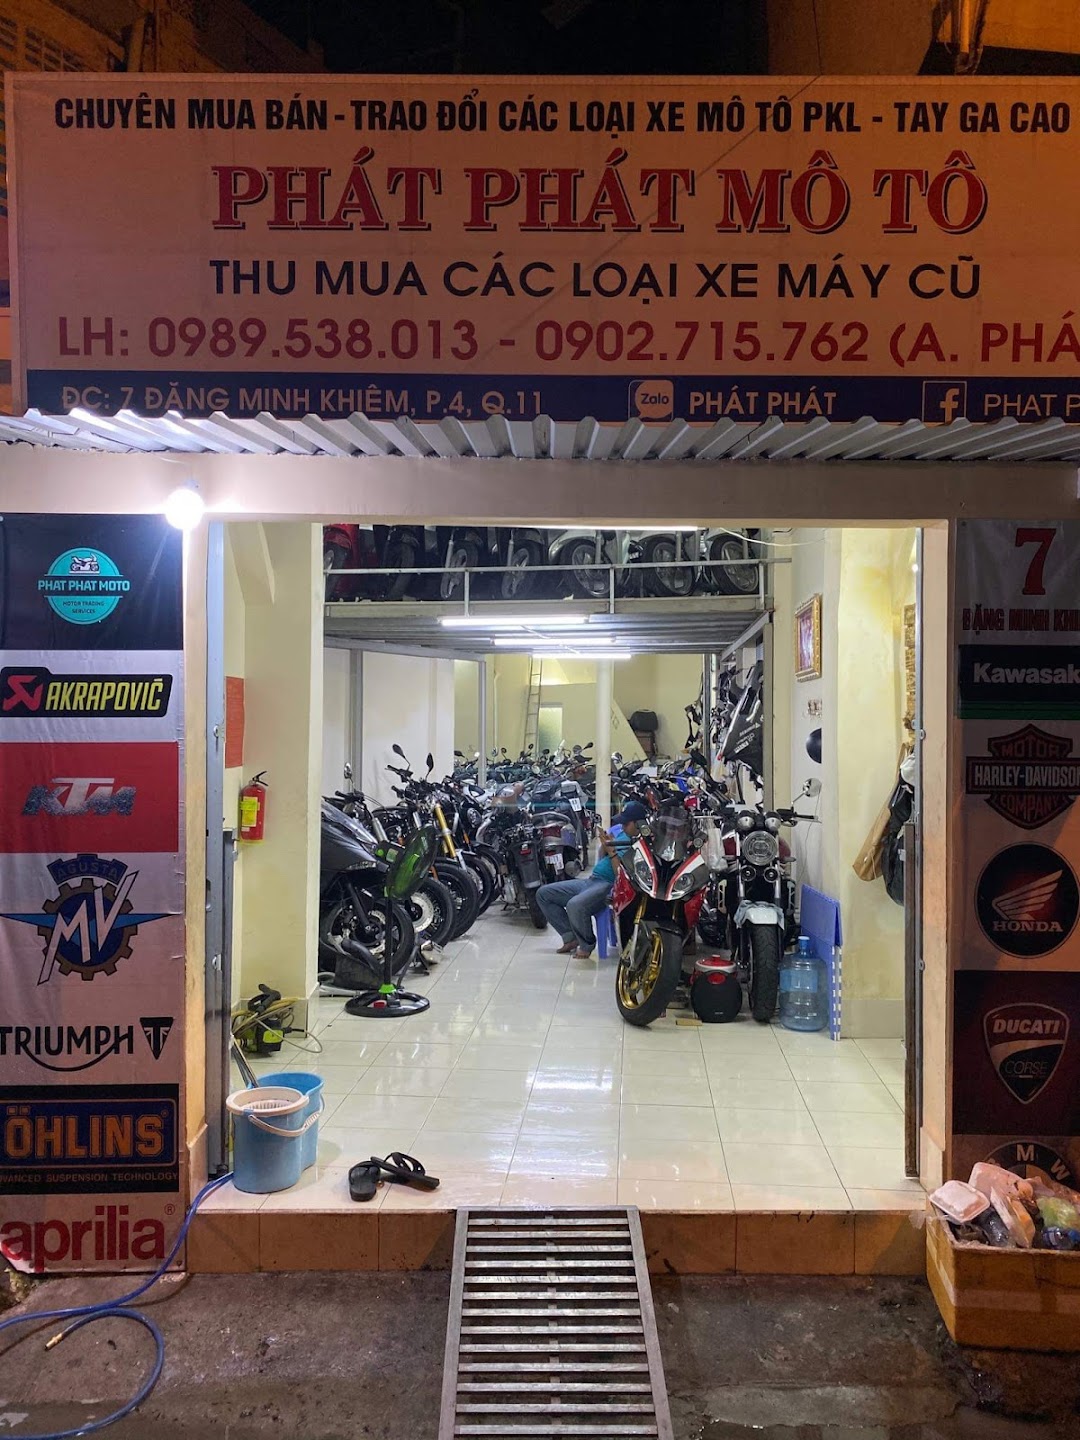 Phat Phat moto